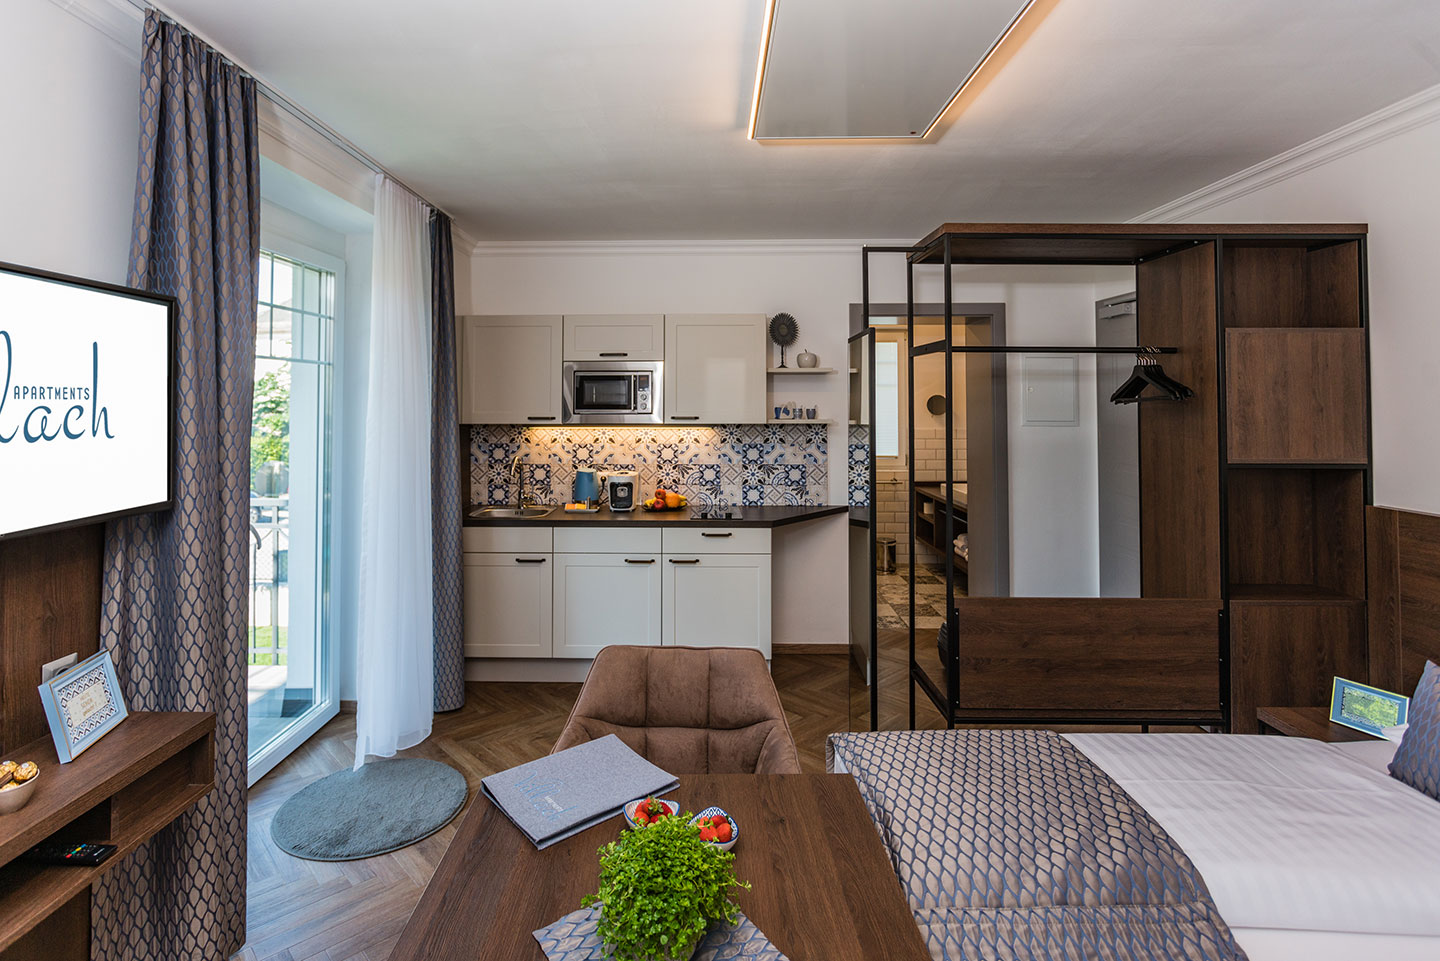 Apartments Villach Anbau – business – slide 8